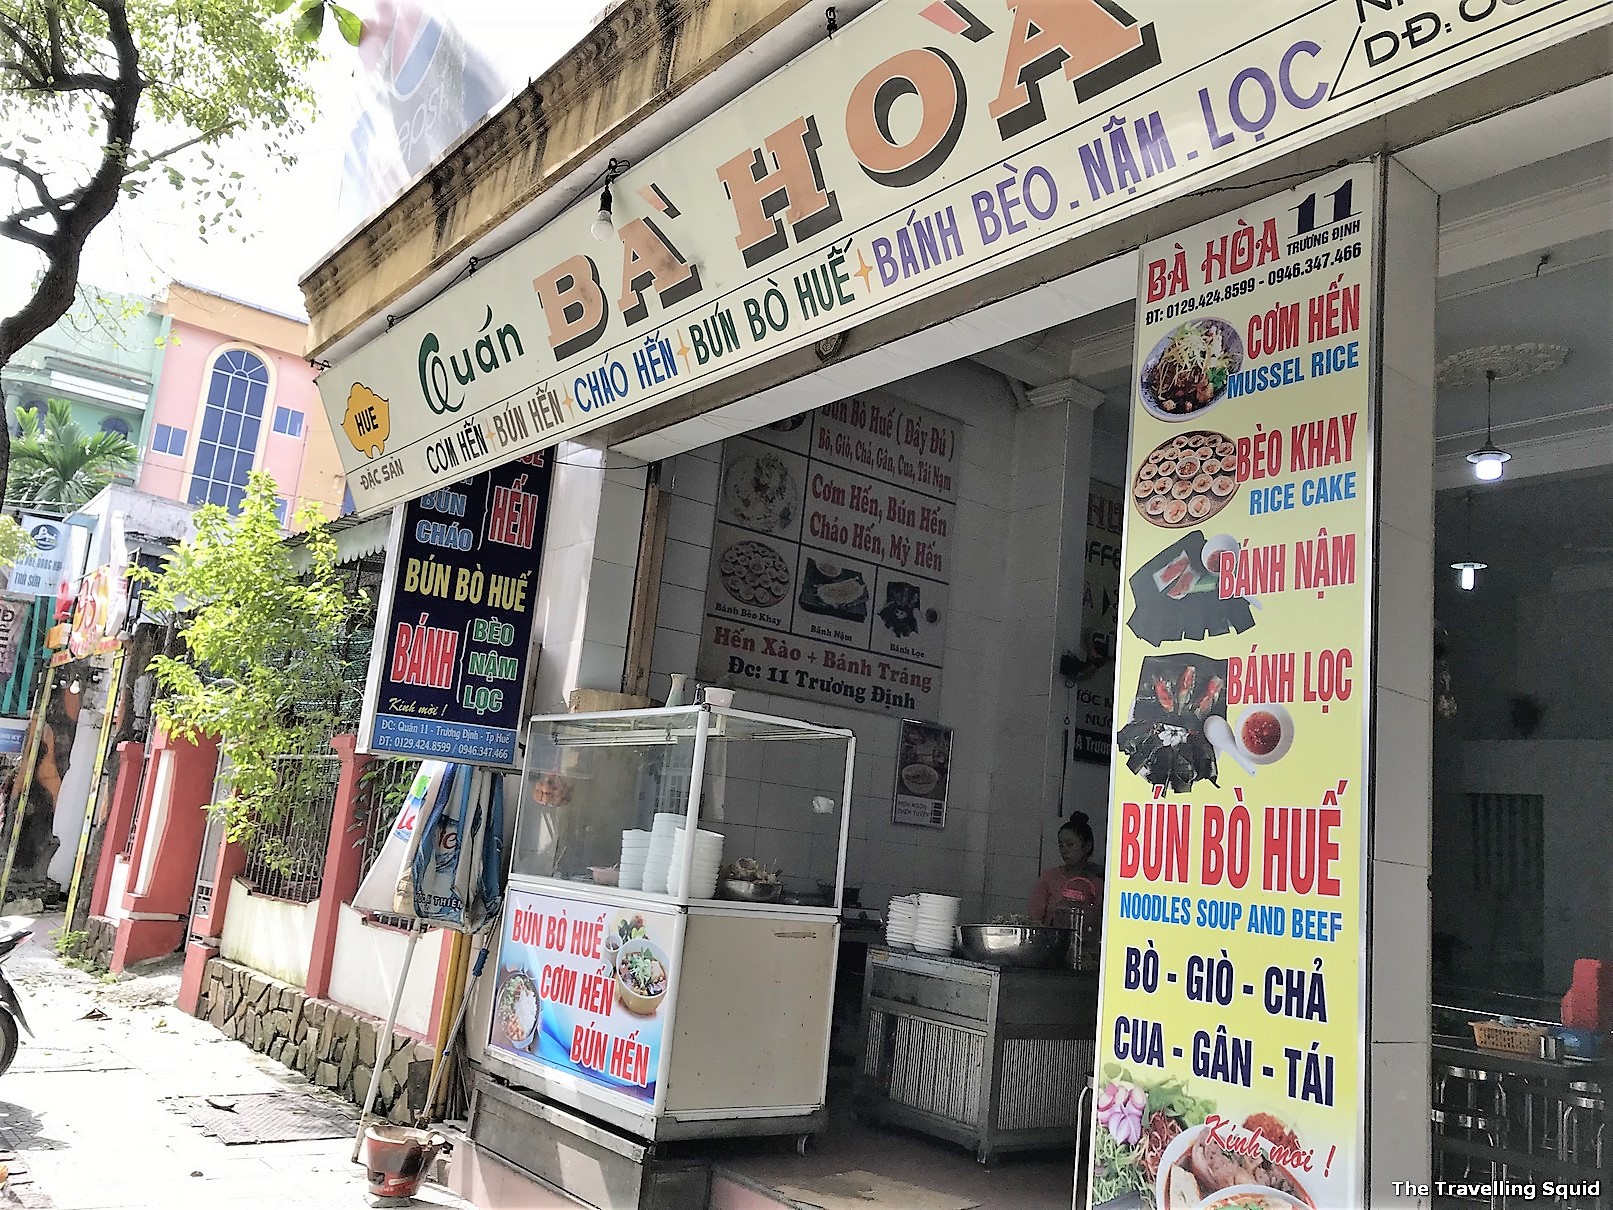 Visit Ba Hoa in Hue for authentic Vietnamese food in Hue